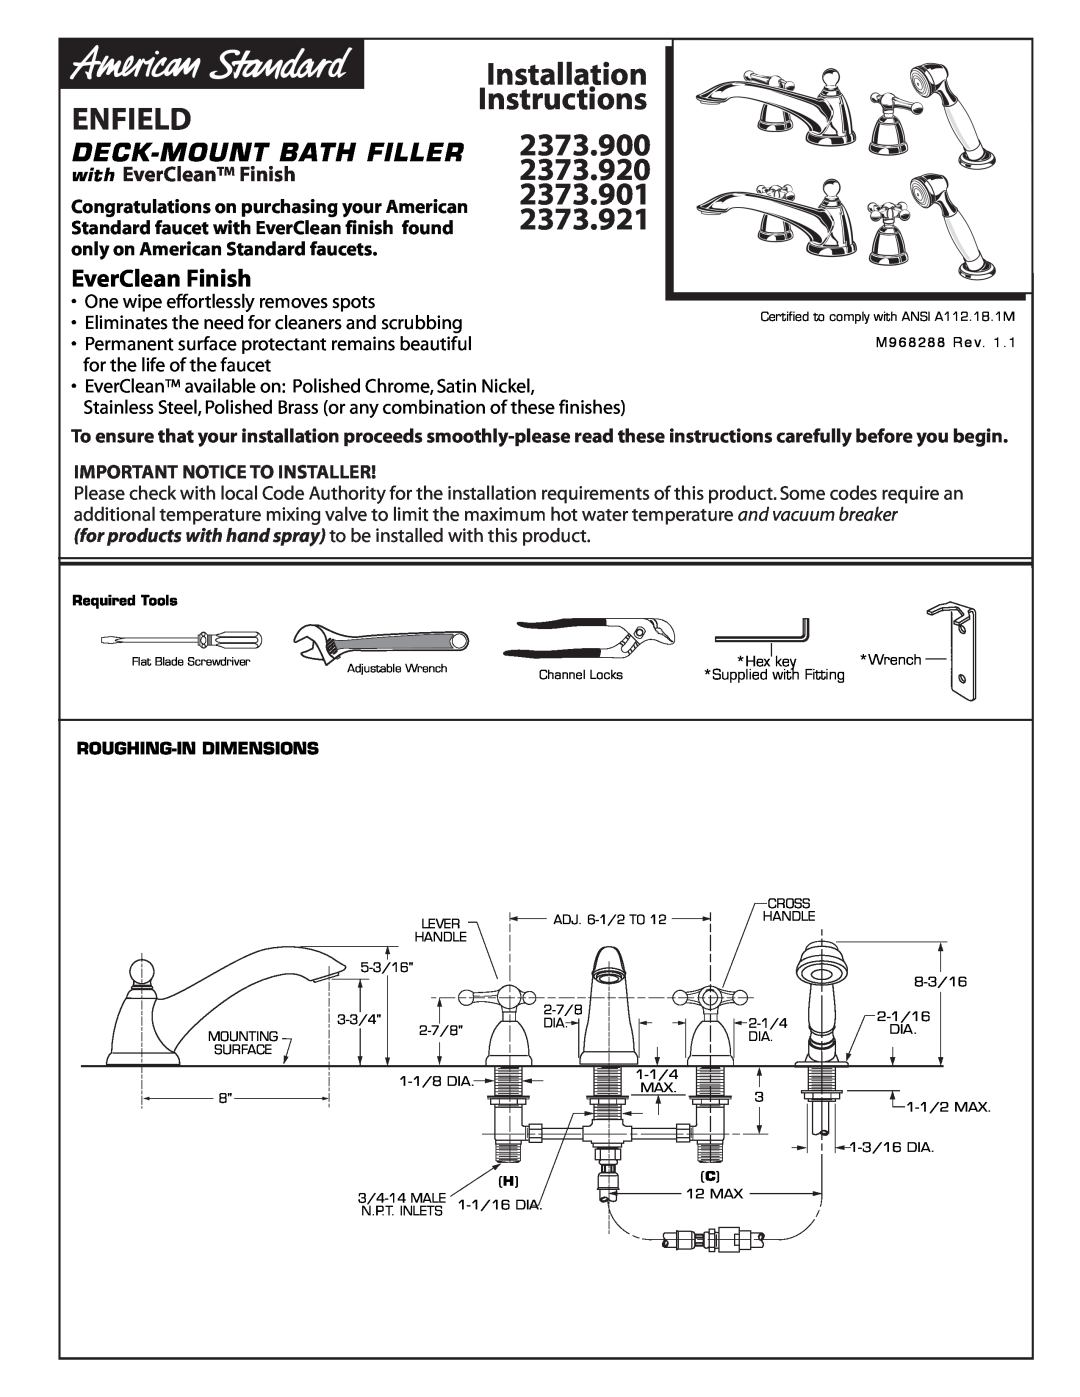 American Standard 2373.901 installation instructions Enfield, 2373.900, Installation Instructions, Deck-Mountbath Filler 